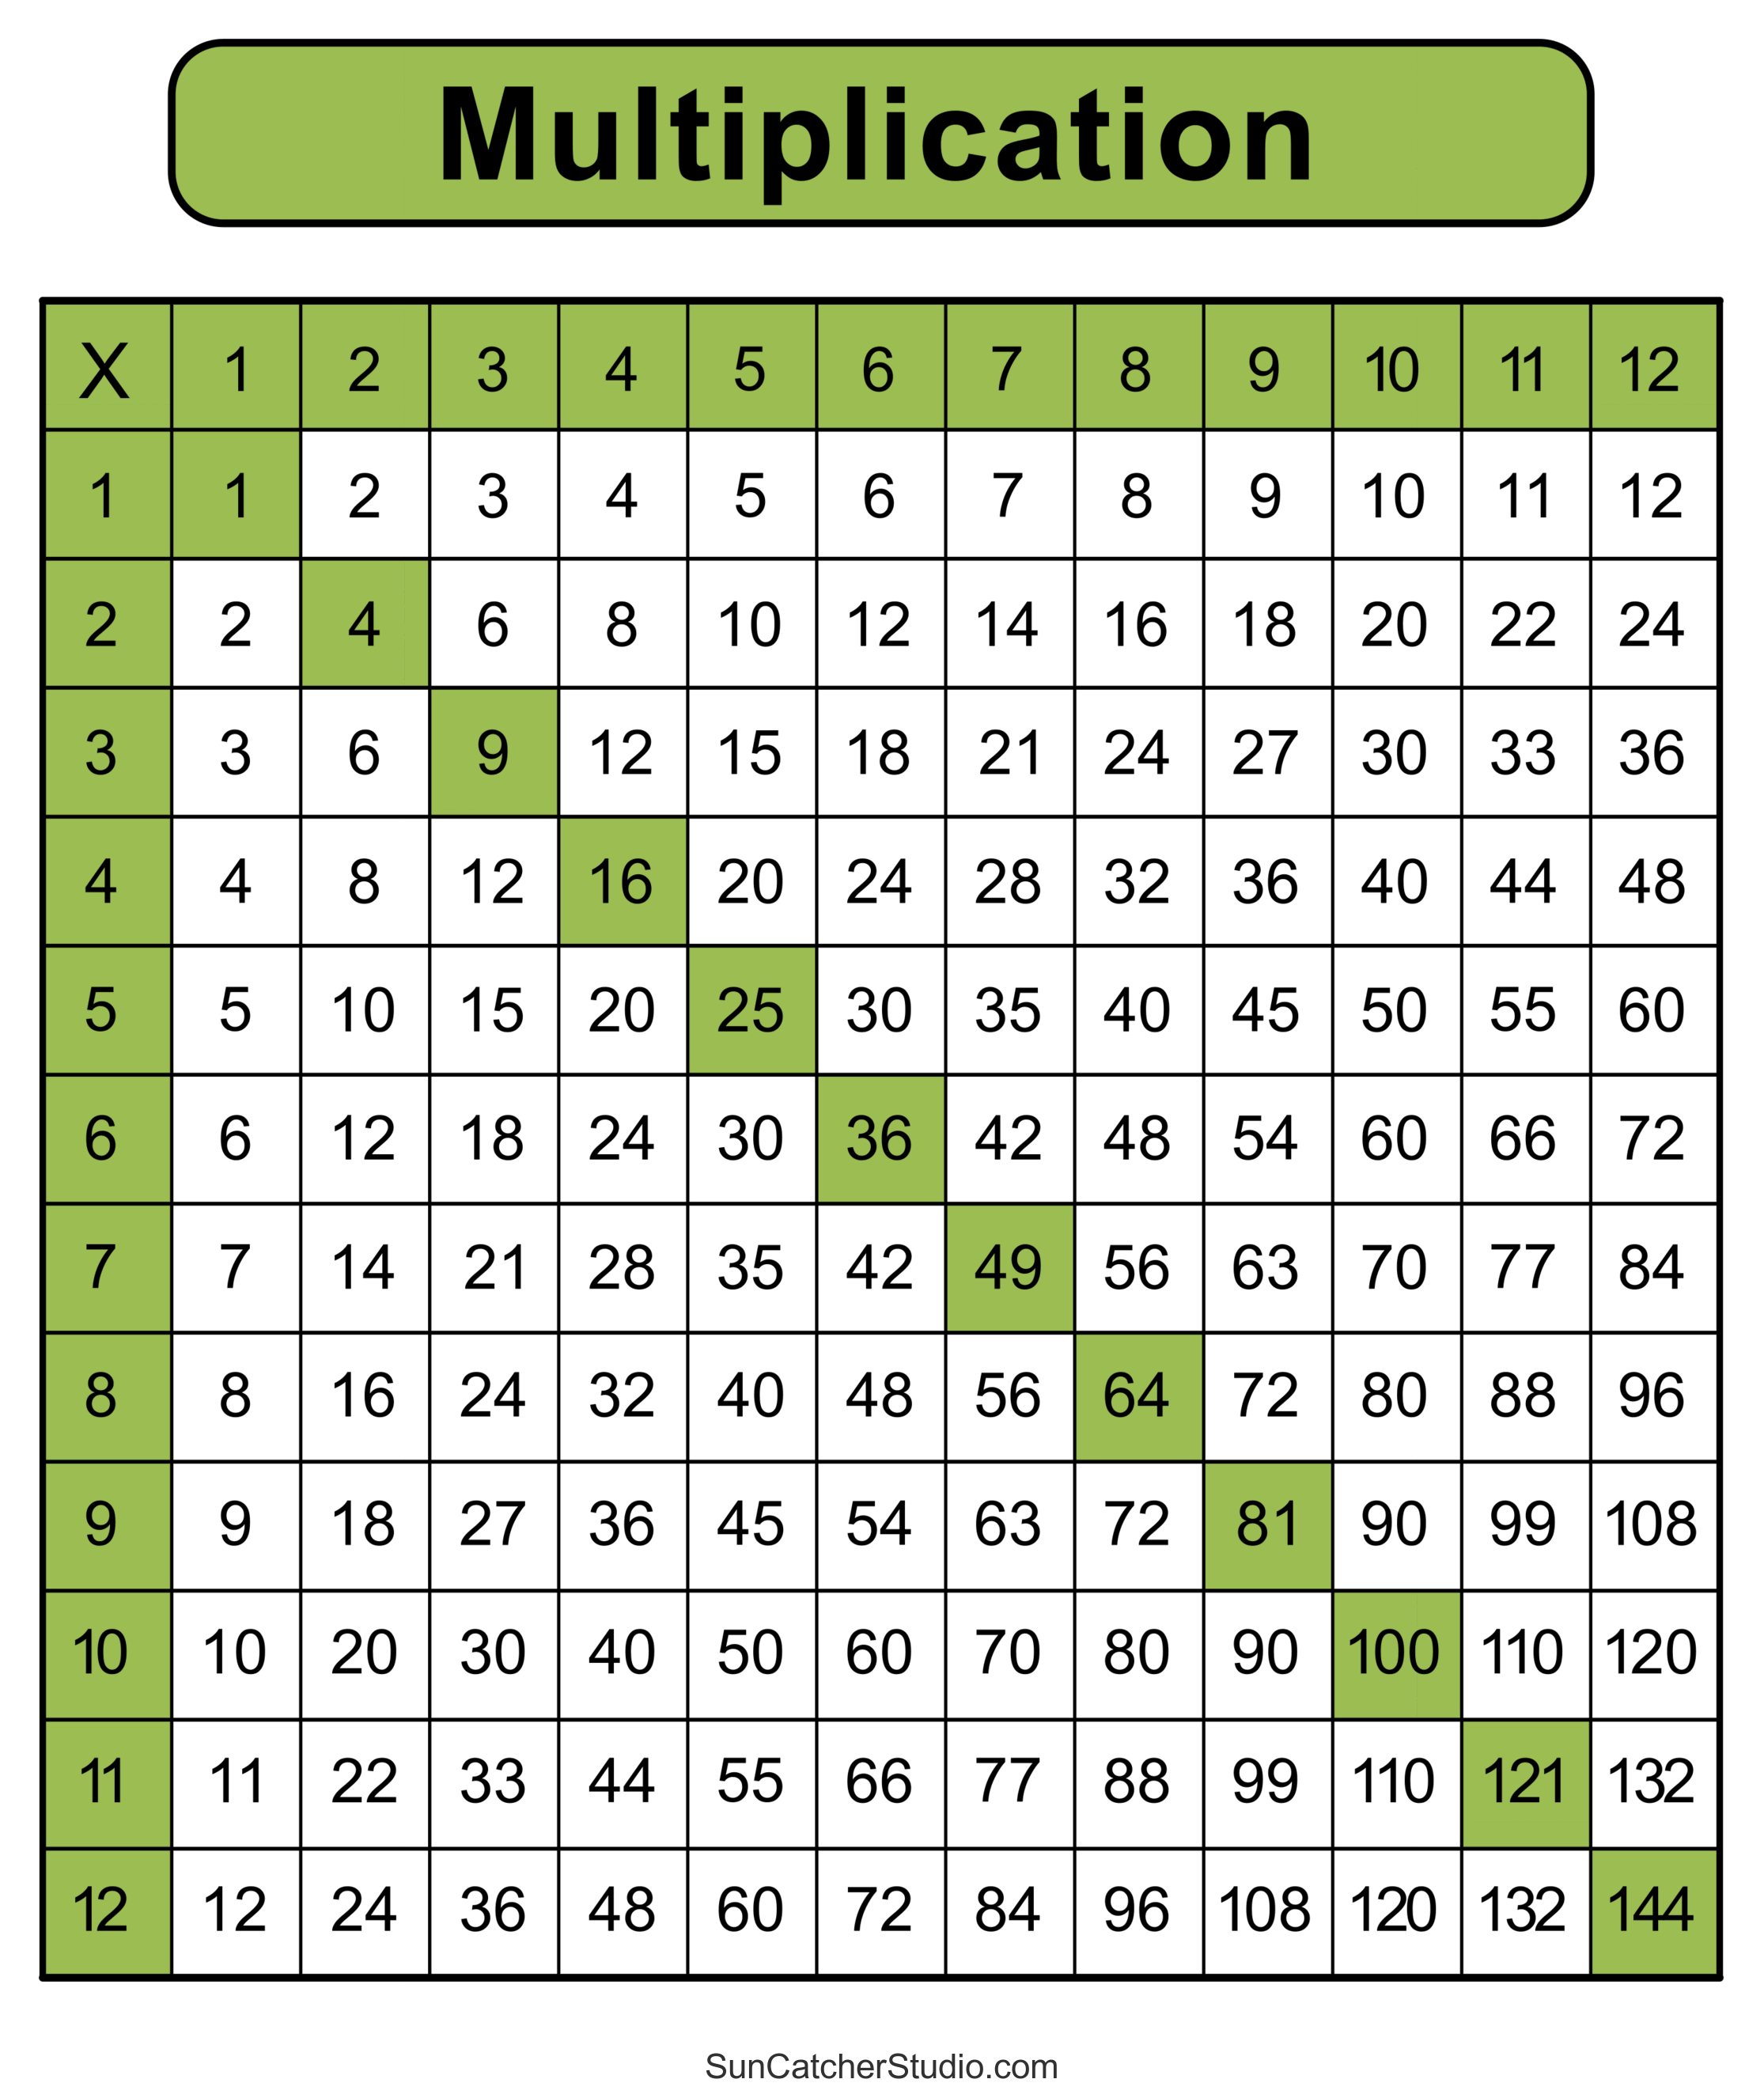 https://suncatcherstudio.com/uploads/printables/math/multiplication-charts/pdf-png/multiplication-table-printable-square-numbers-1-12-fefefe-99bb55.png